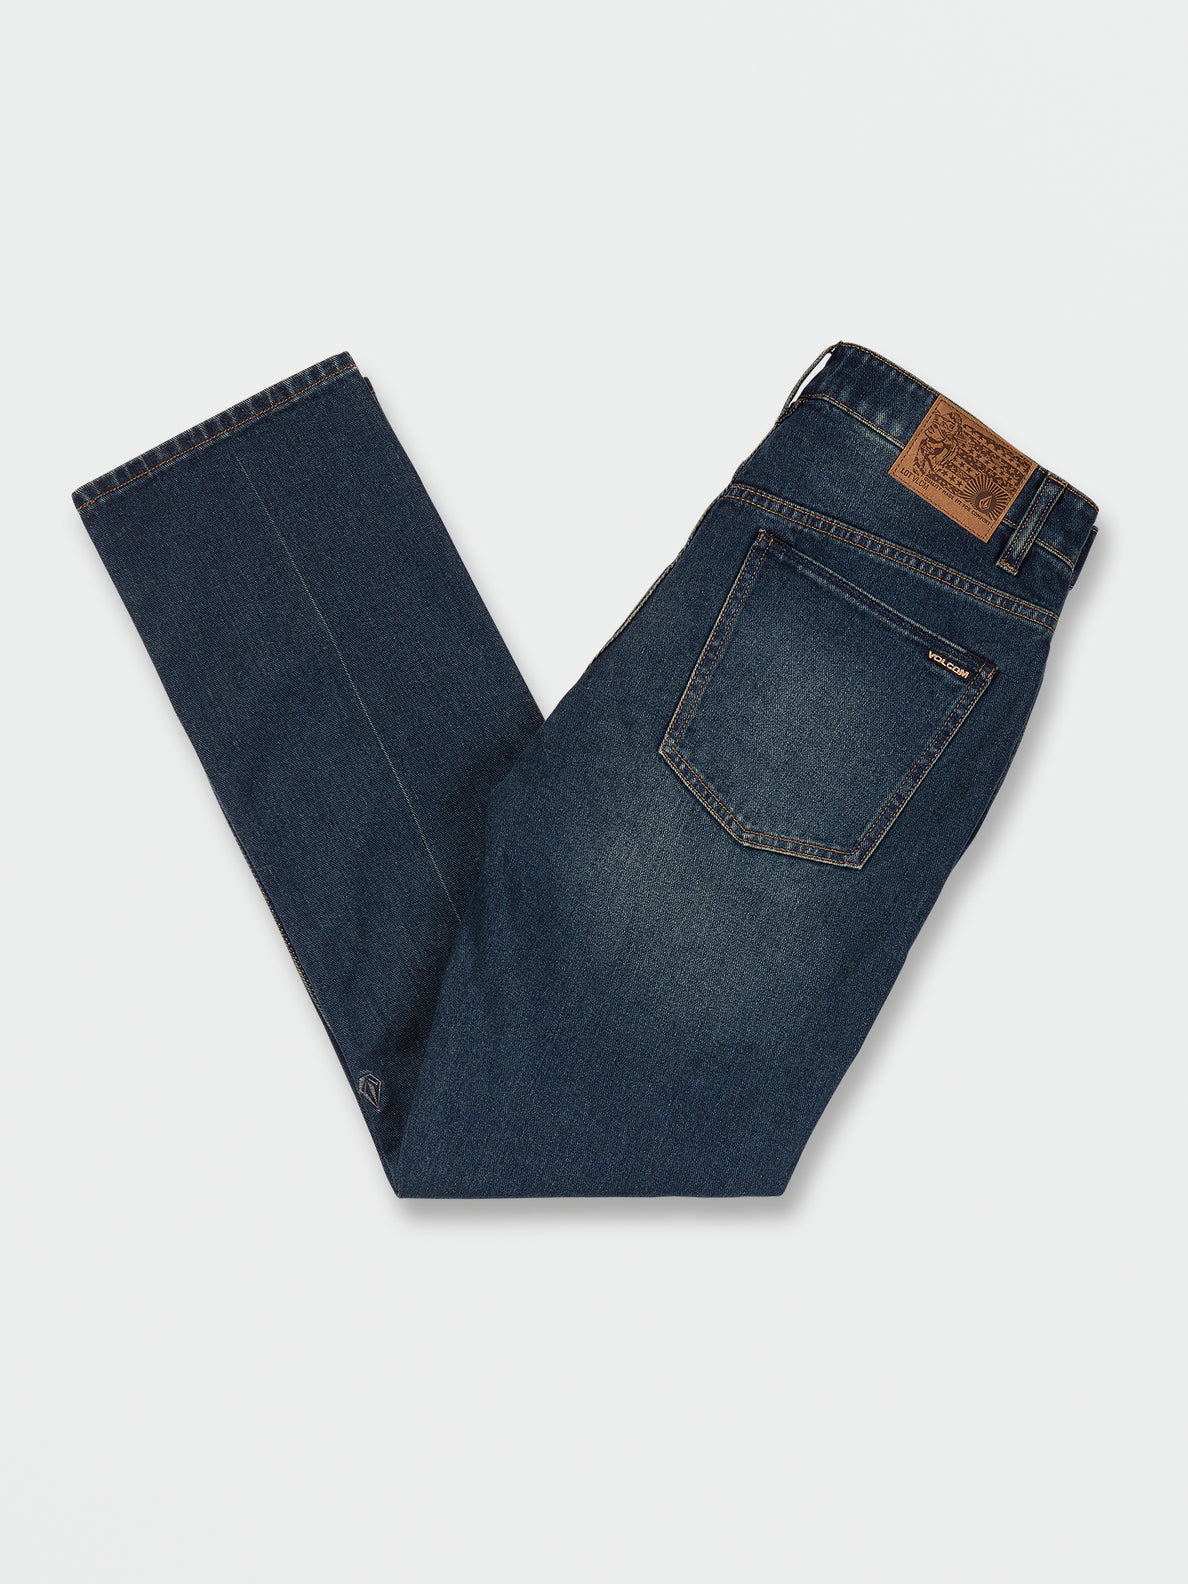 Solver Modern Fit Jeans - Matured Blue (A1912303_MBL) [B]